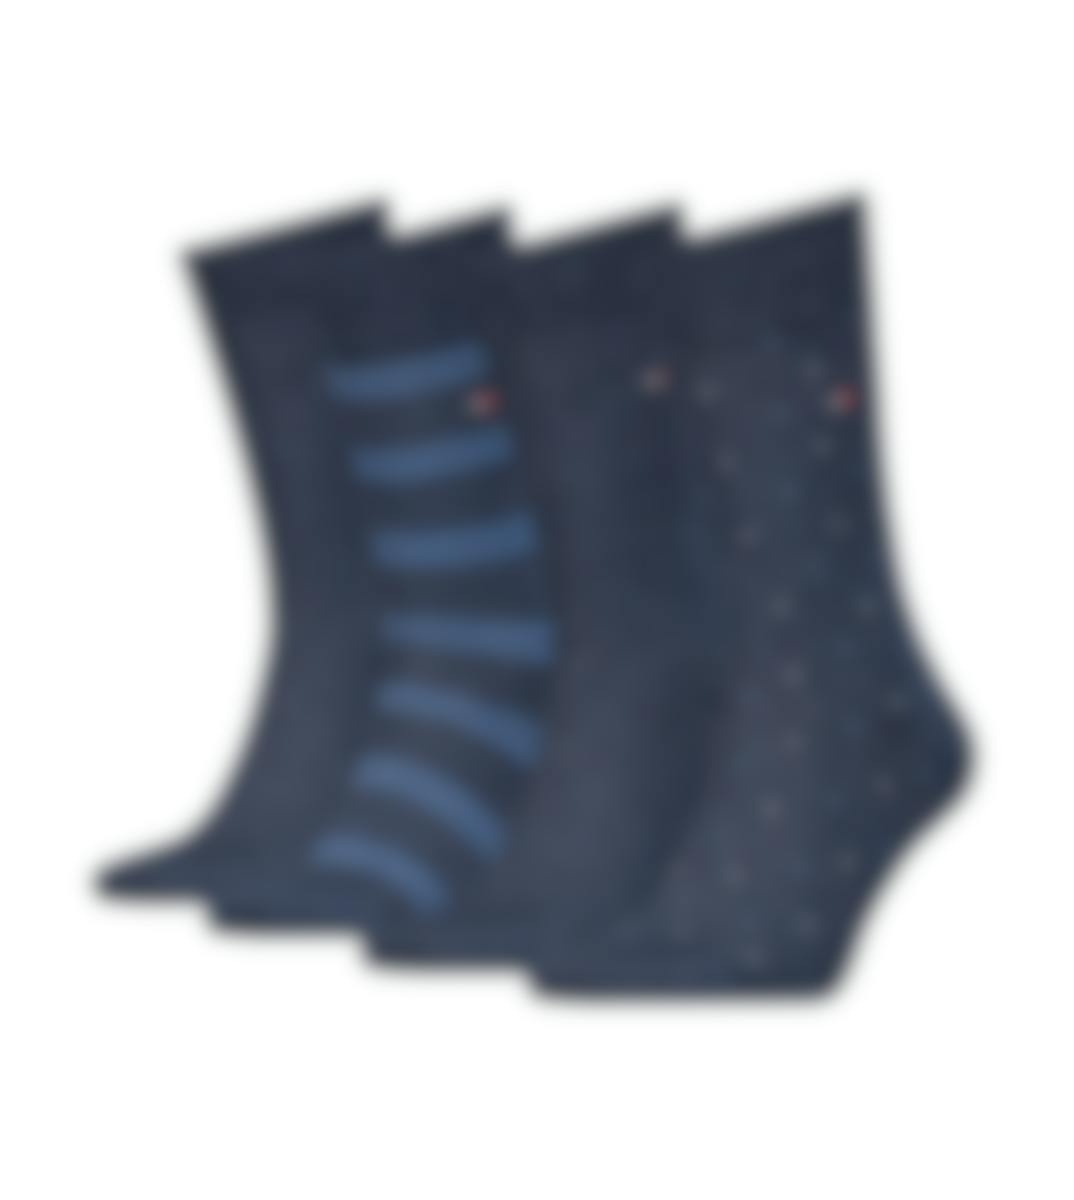 Tommy Hilfiger sokken 4 paar Tin Giftbox Stripe Dot Heren